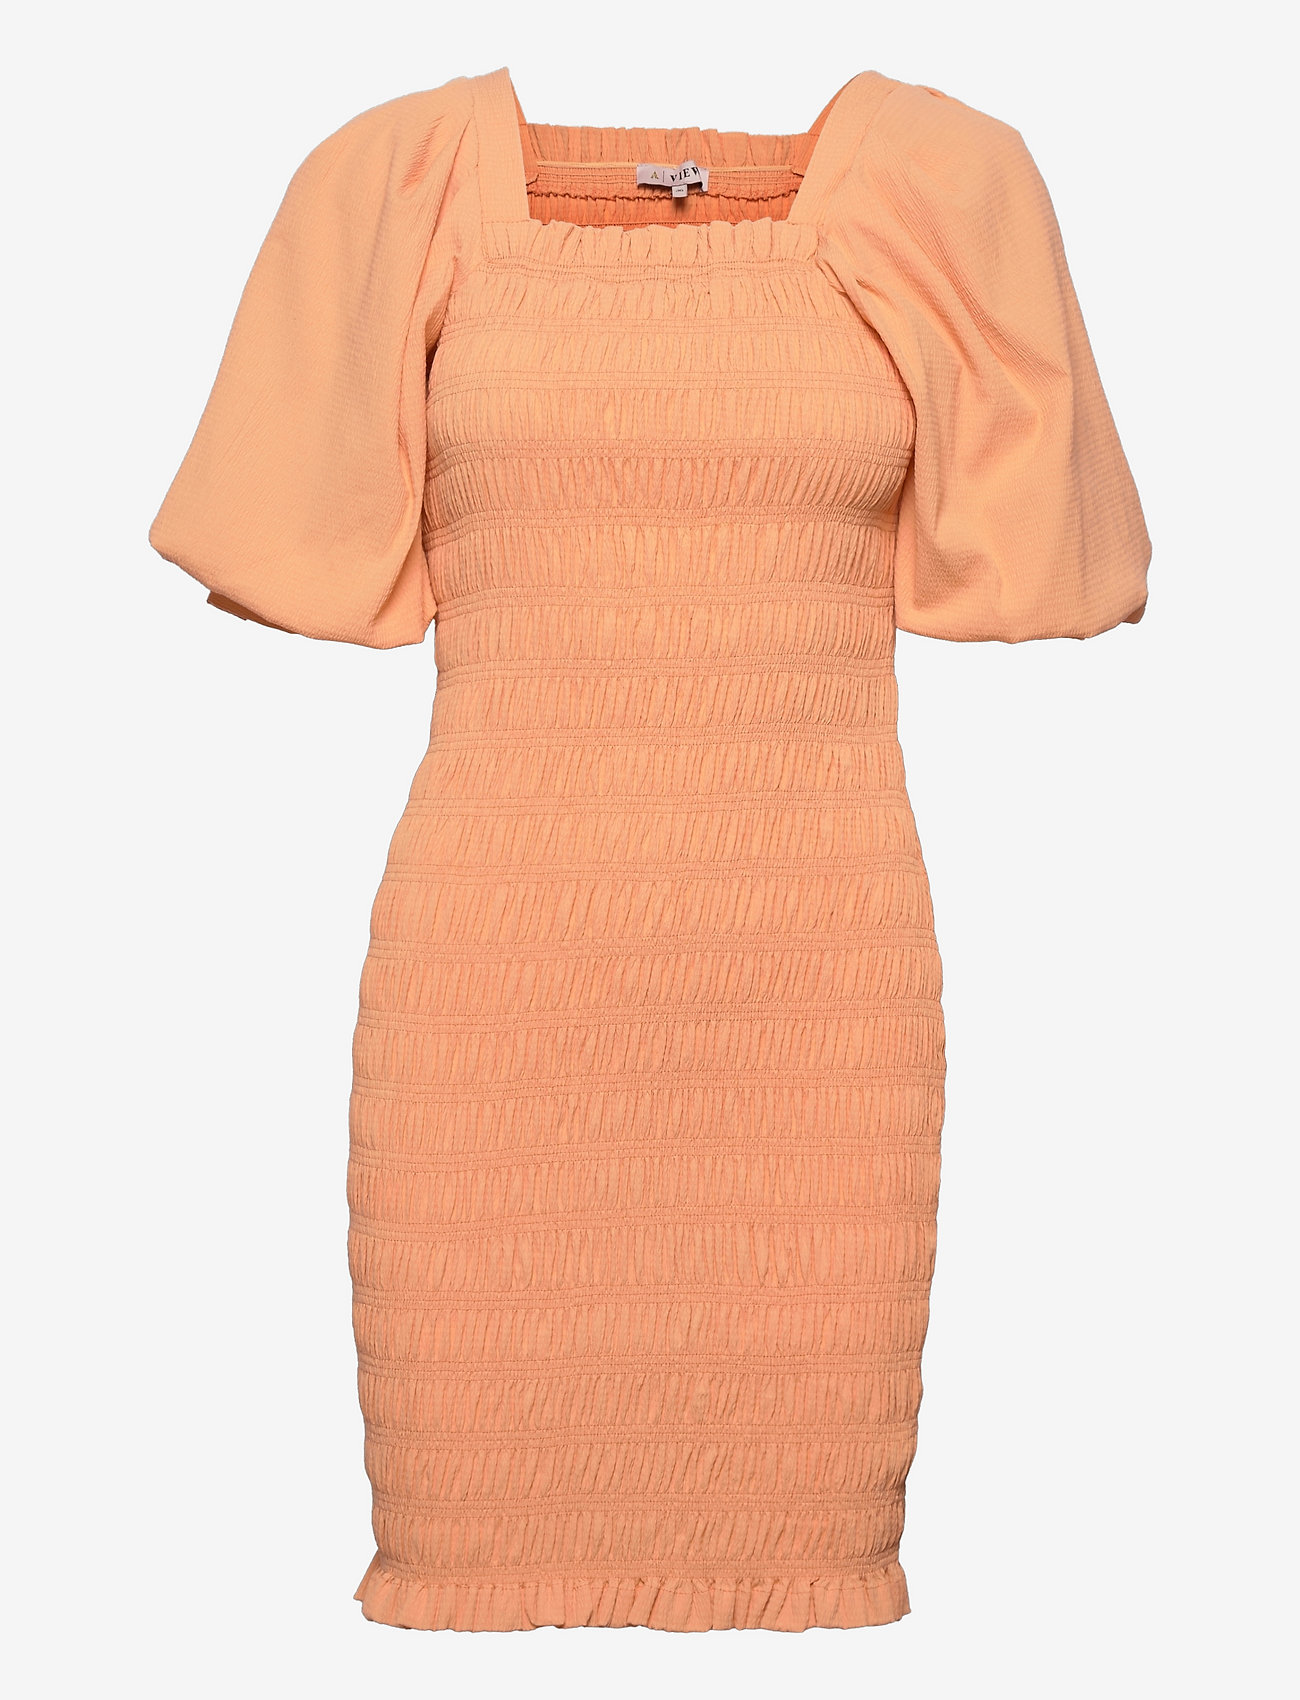 A-View - Rikka plain dress - feestelijke kleding voor outlet-prijzen - orange - 0